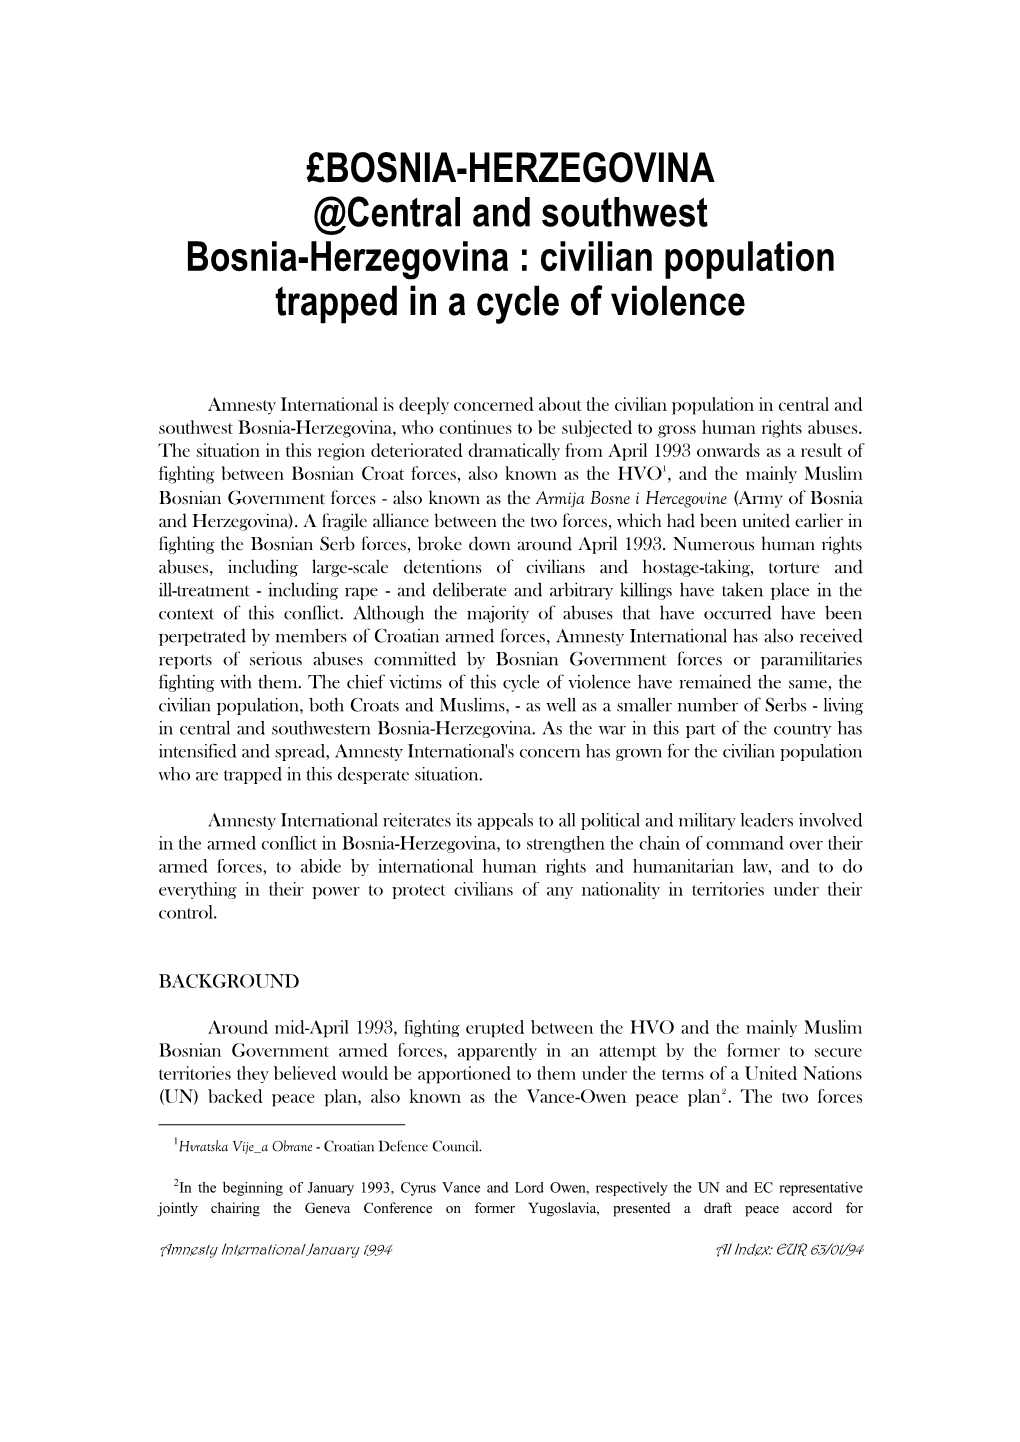 £BOSNIA-HERZEGOVINA @Central and Southwest Bosnia-Herzegovina : Civilian Population Trapped in a Cycle of Violence